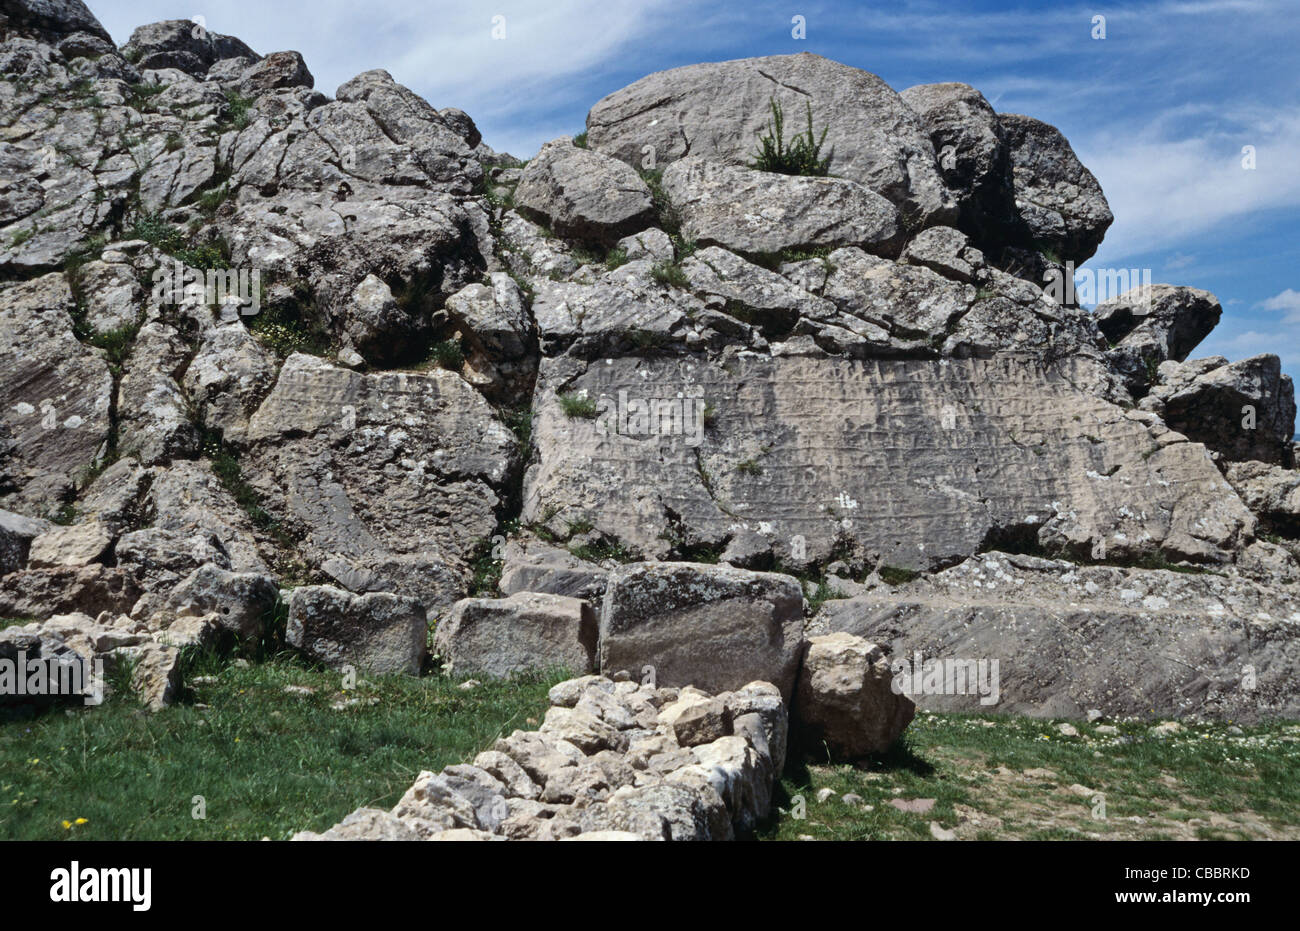 Nişantaş (iscrizione rock, Supiluliuma II (c. 1200 BC)), Hattusa, Boğazköy, Turchia 000517 0604 Foto Stock